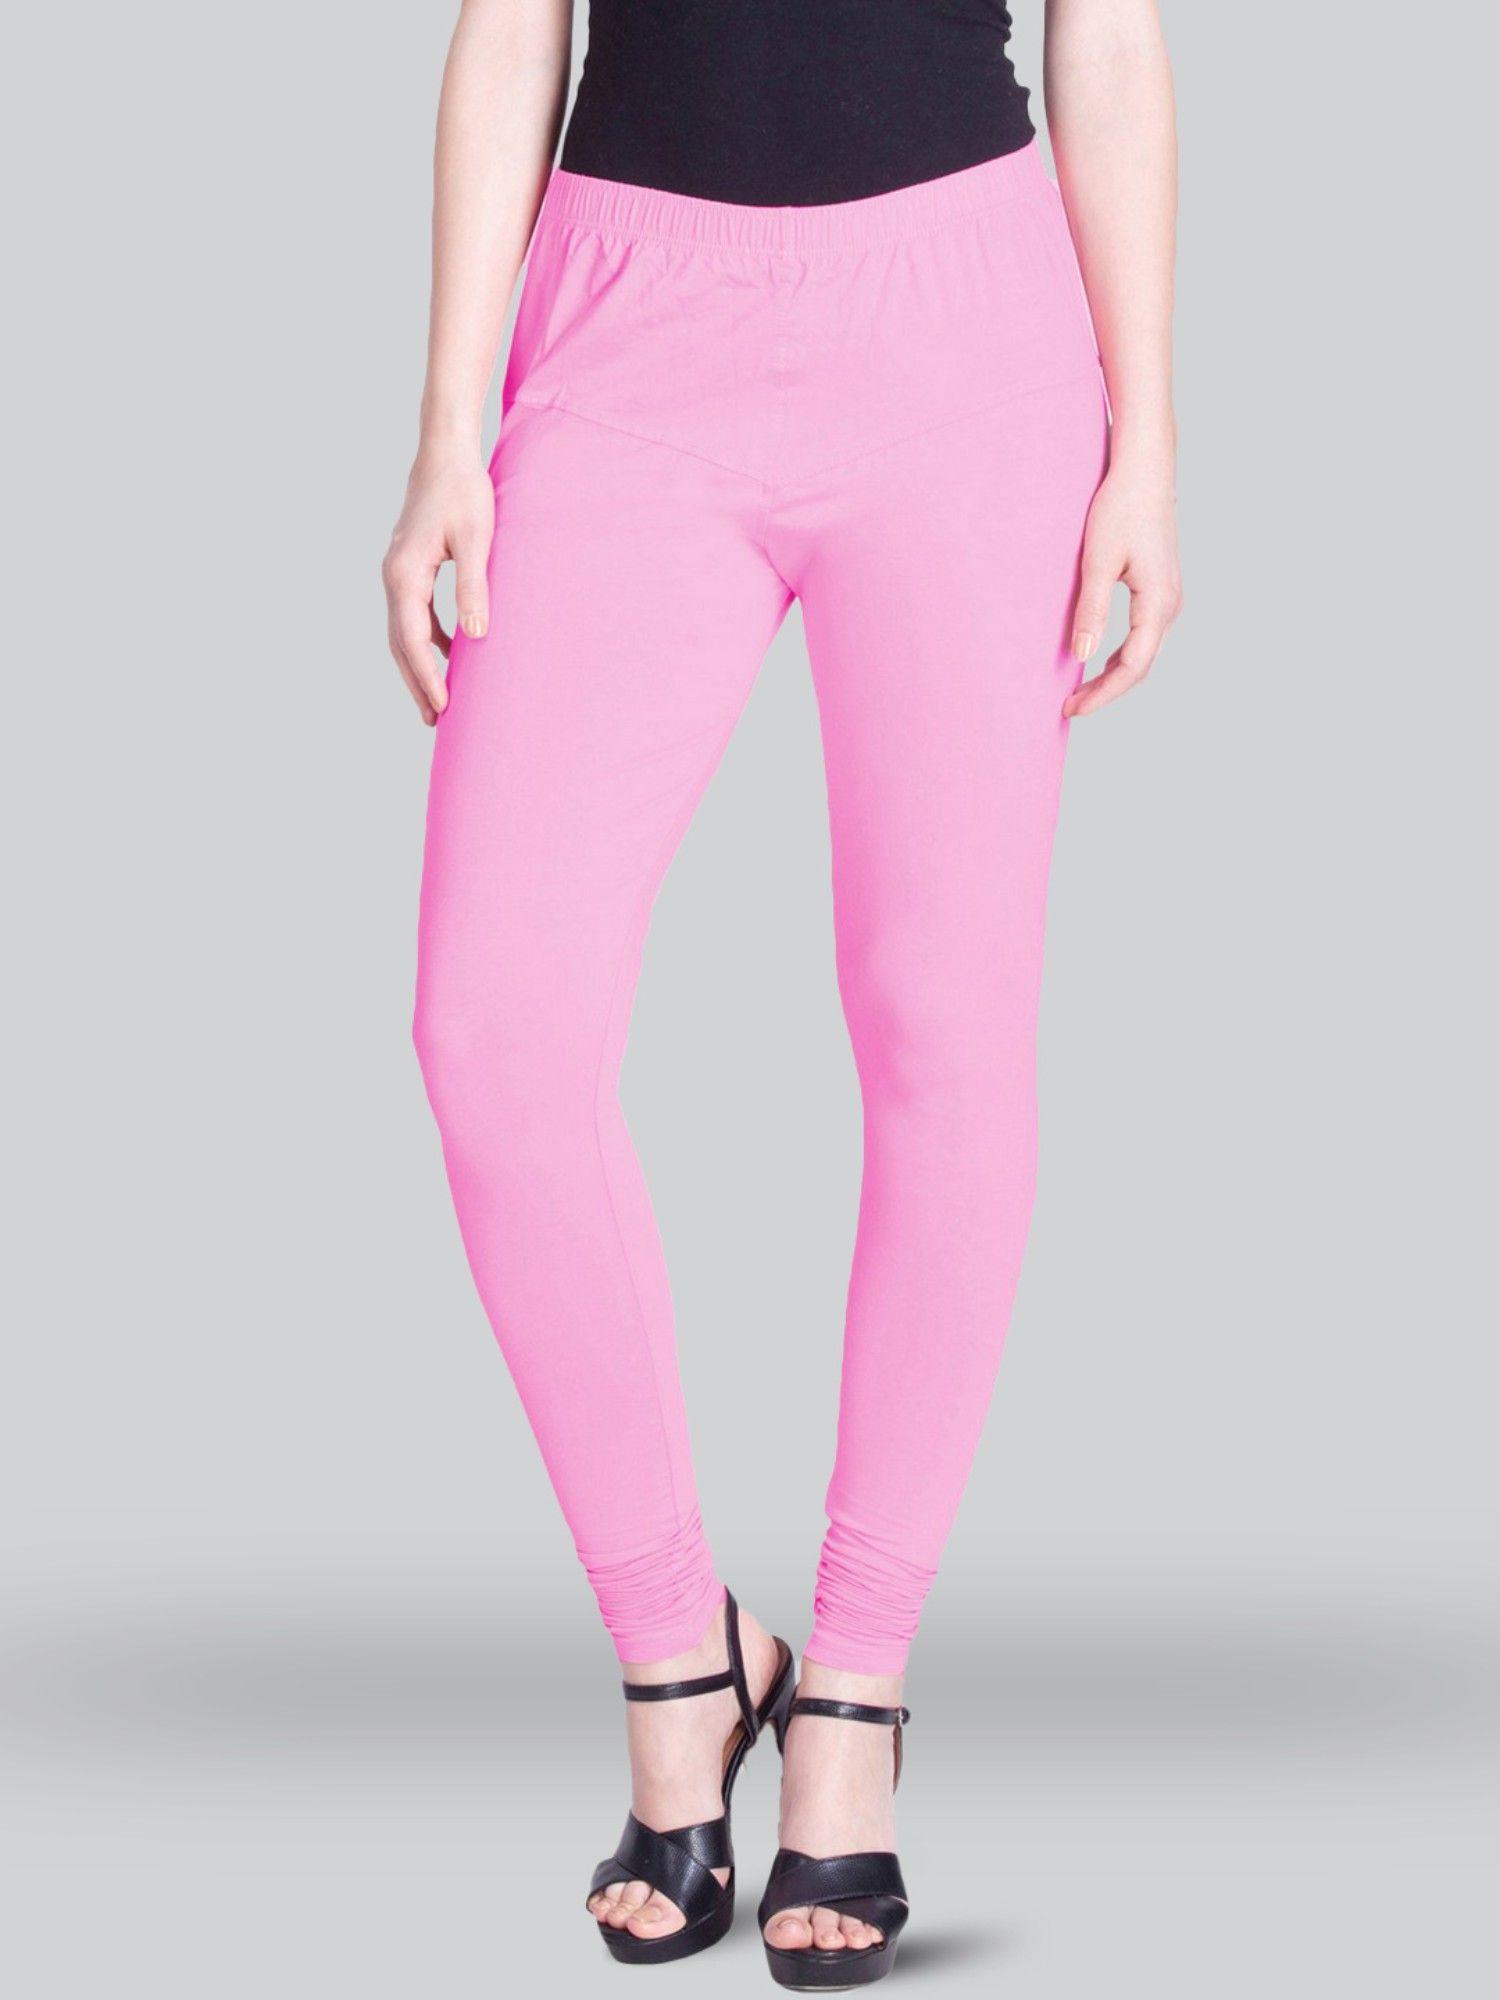 light pink churidar leggings